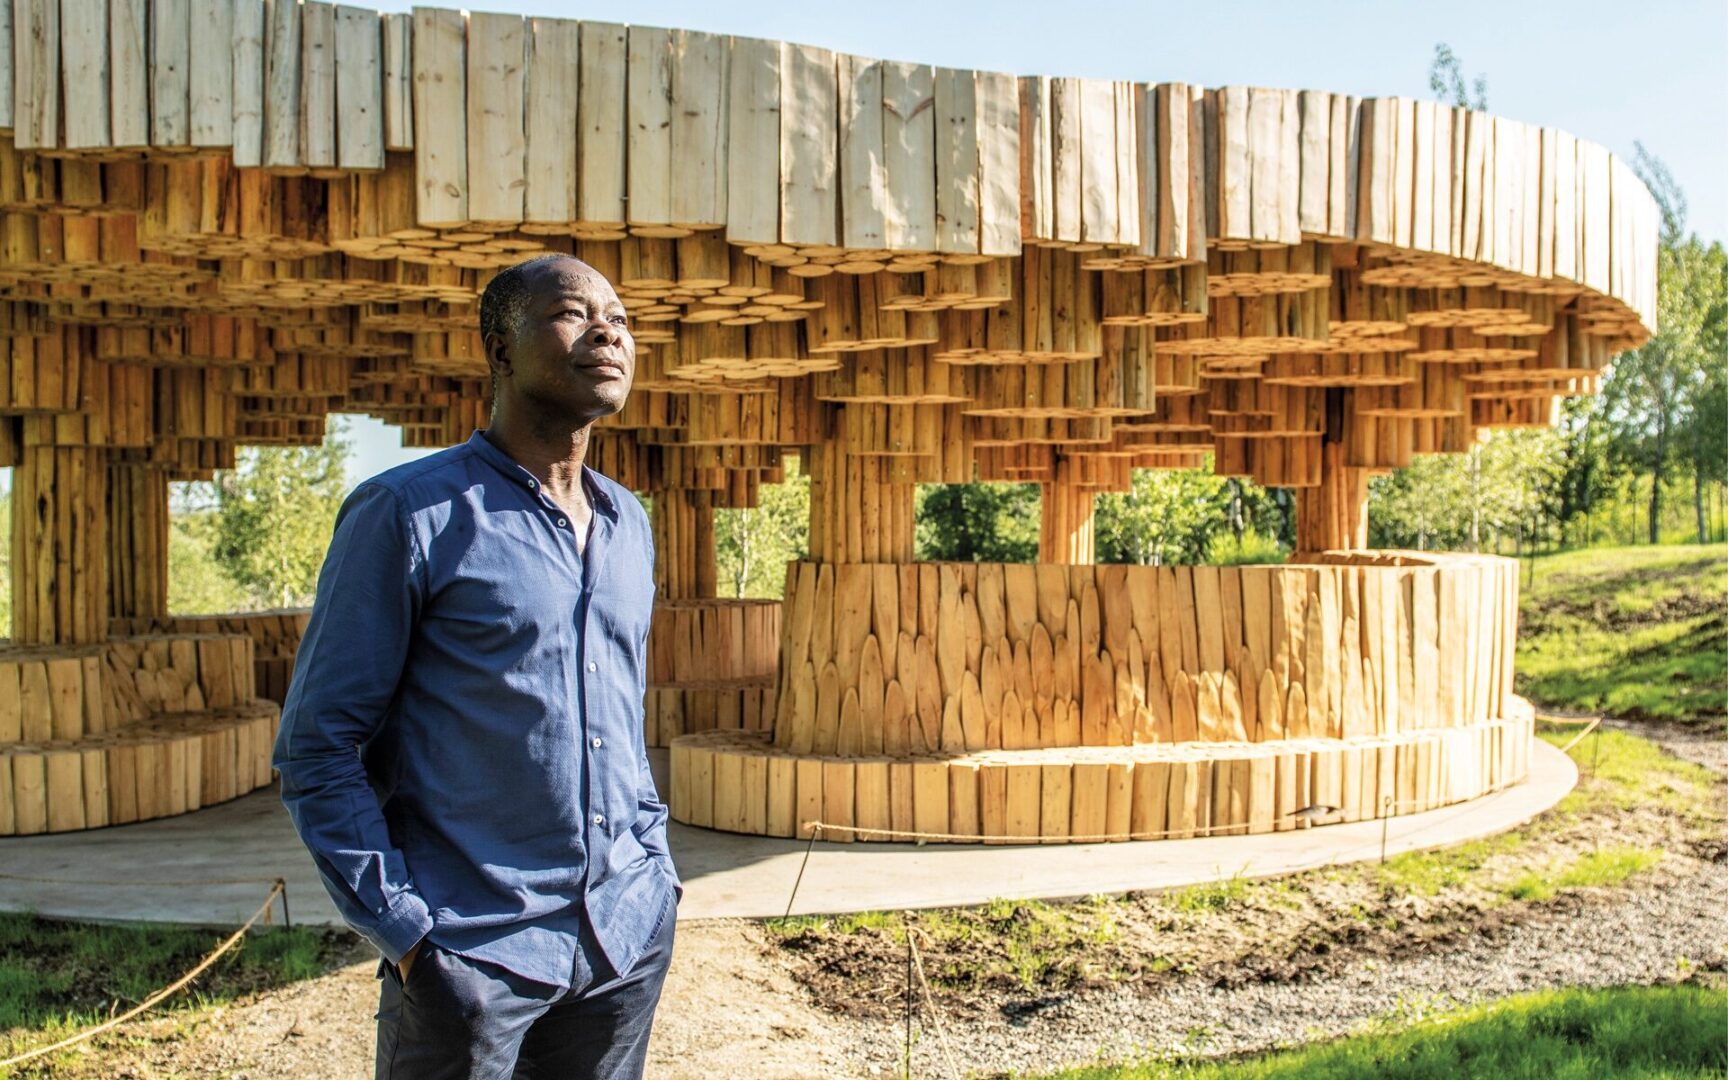 האדריכל האפריקאי הראשון שזכה בפריצקר, Diébédo Francis Kéré